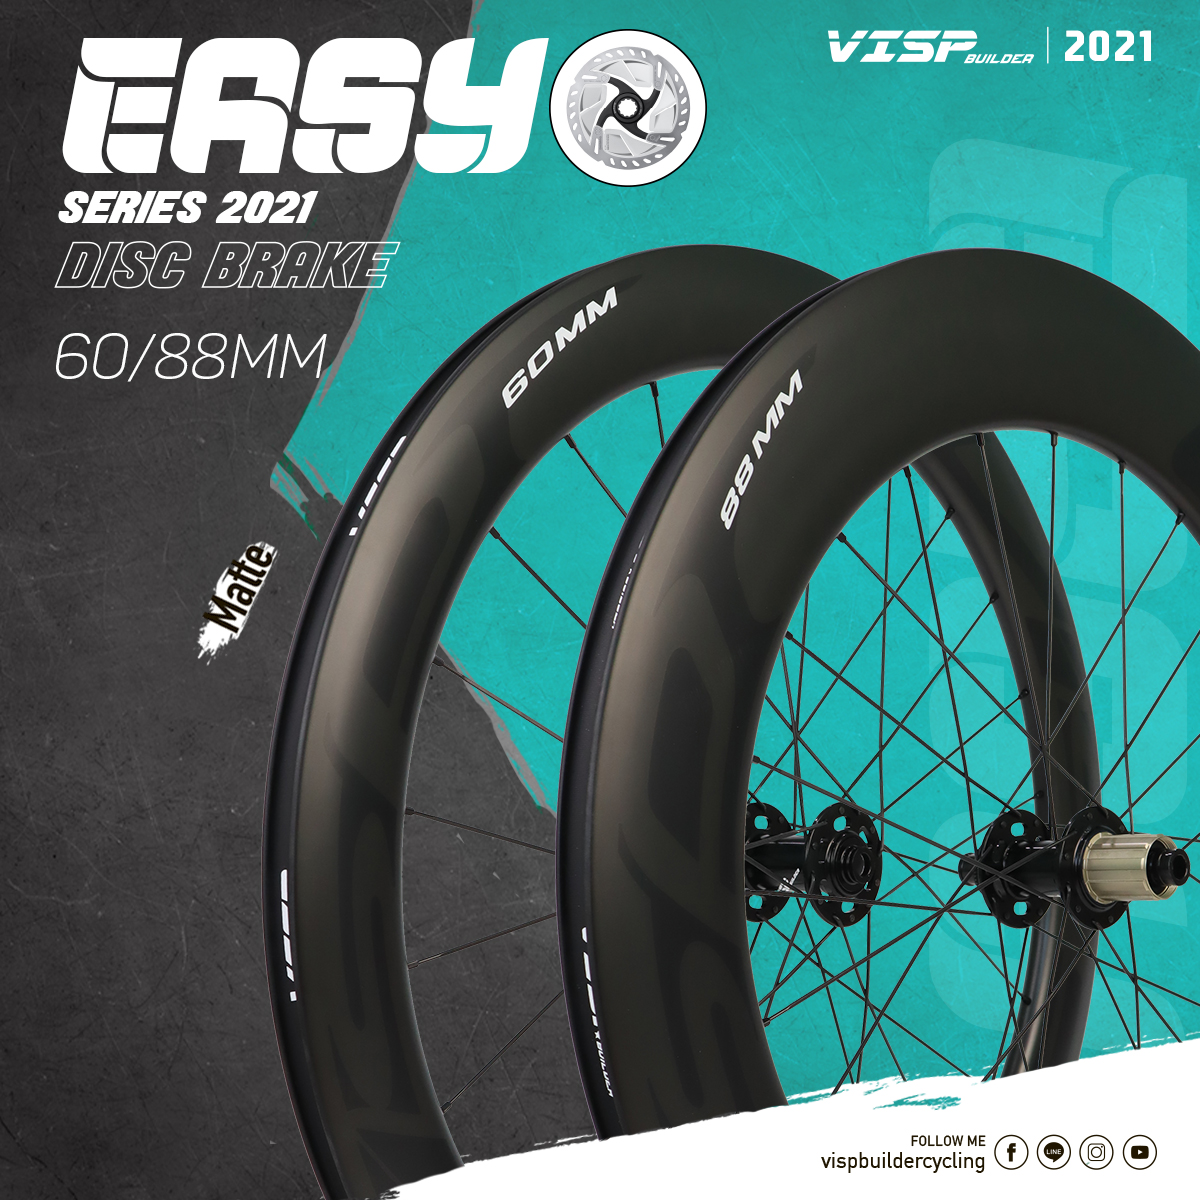 VISP Builder Easy Series 2021 (Disc Brake)